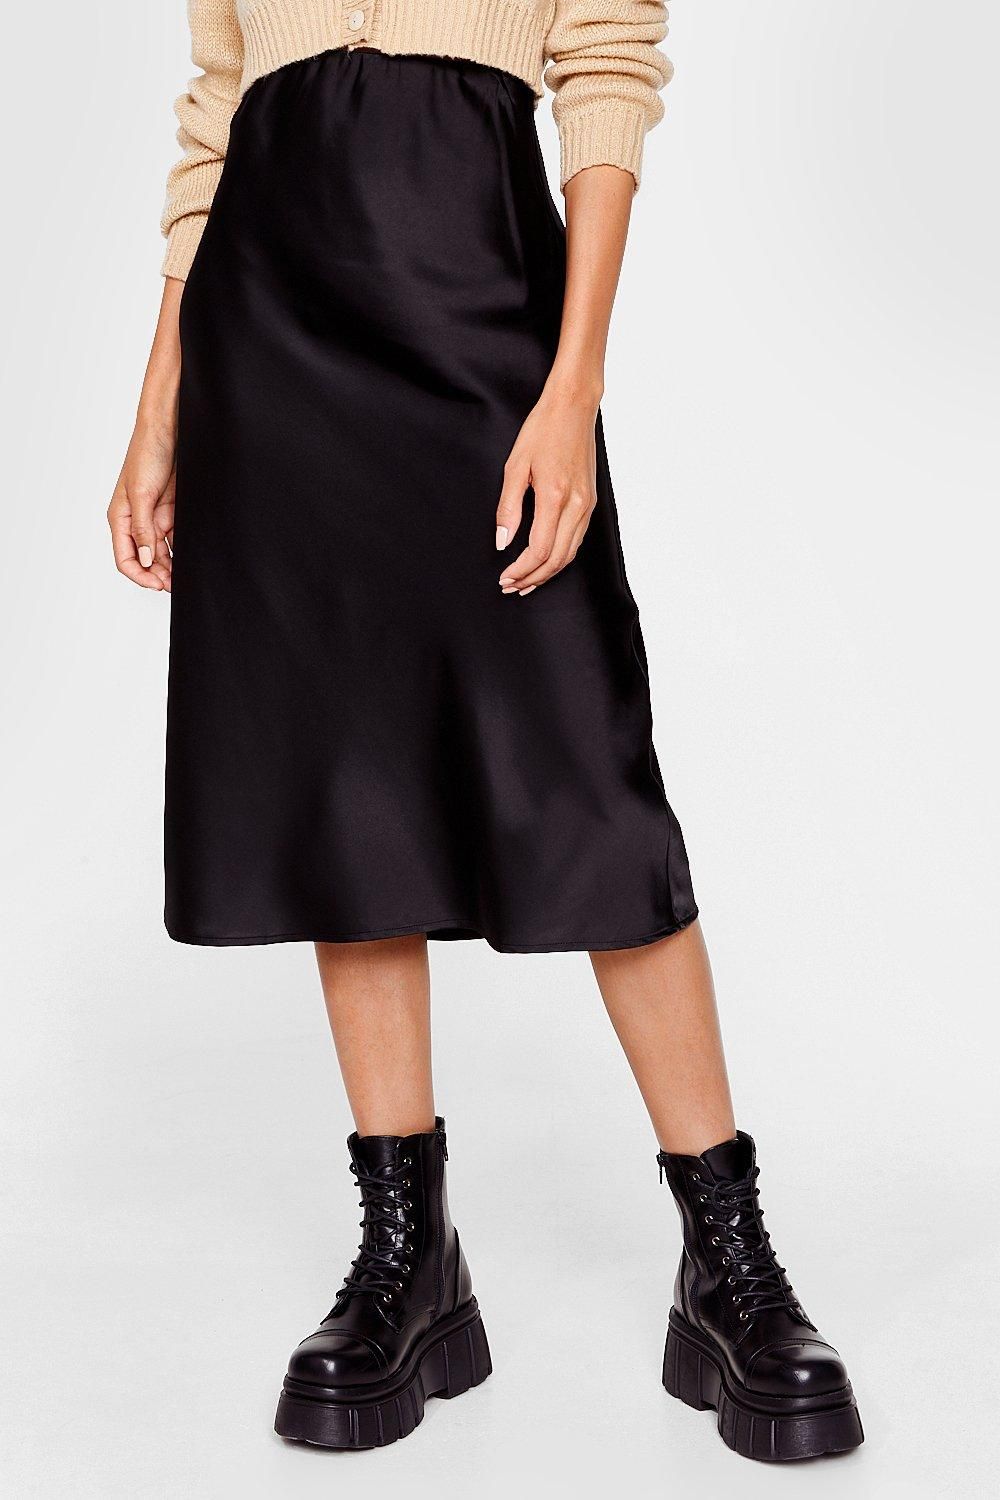 Just My Type Satin Midi Skirt | Nasty Gal (US)